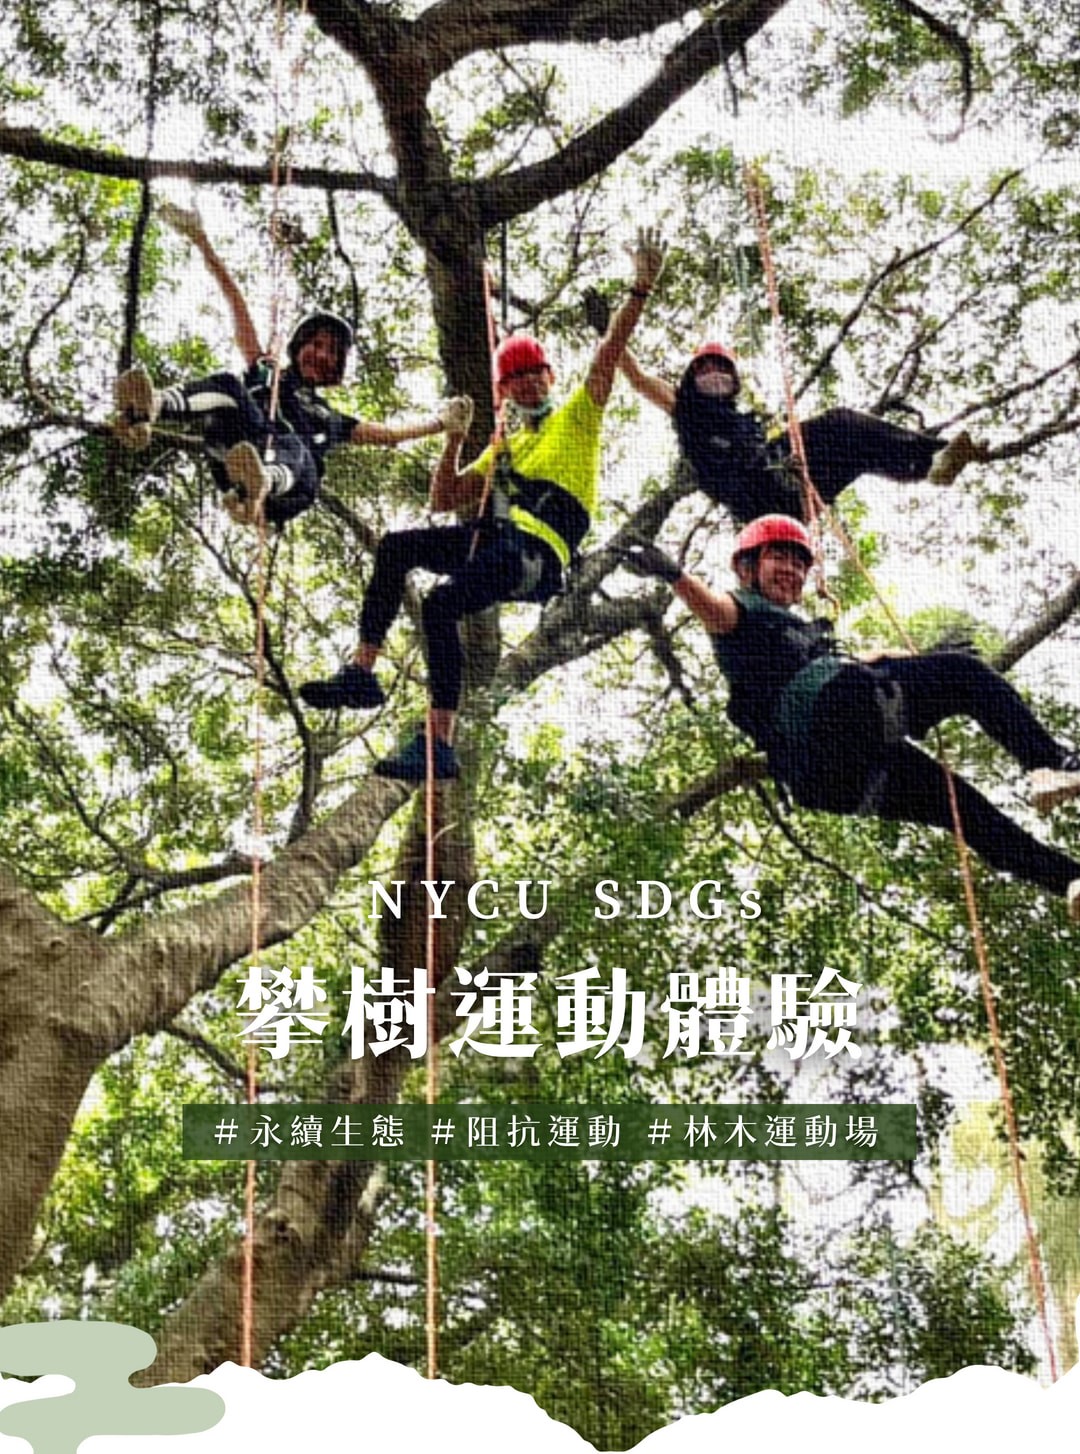 113 Tree Climbing